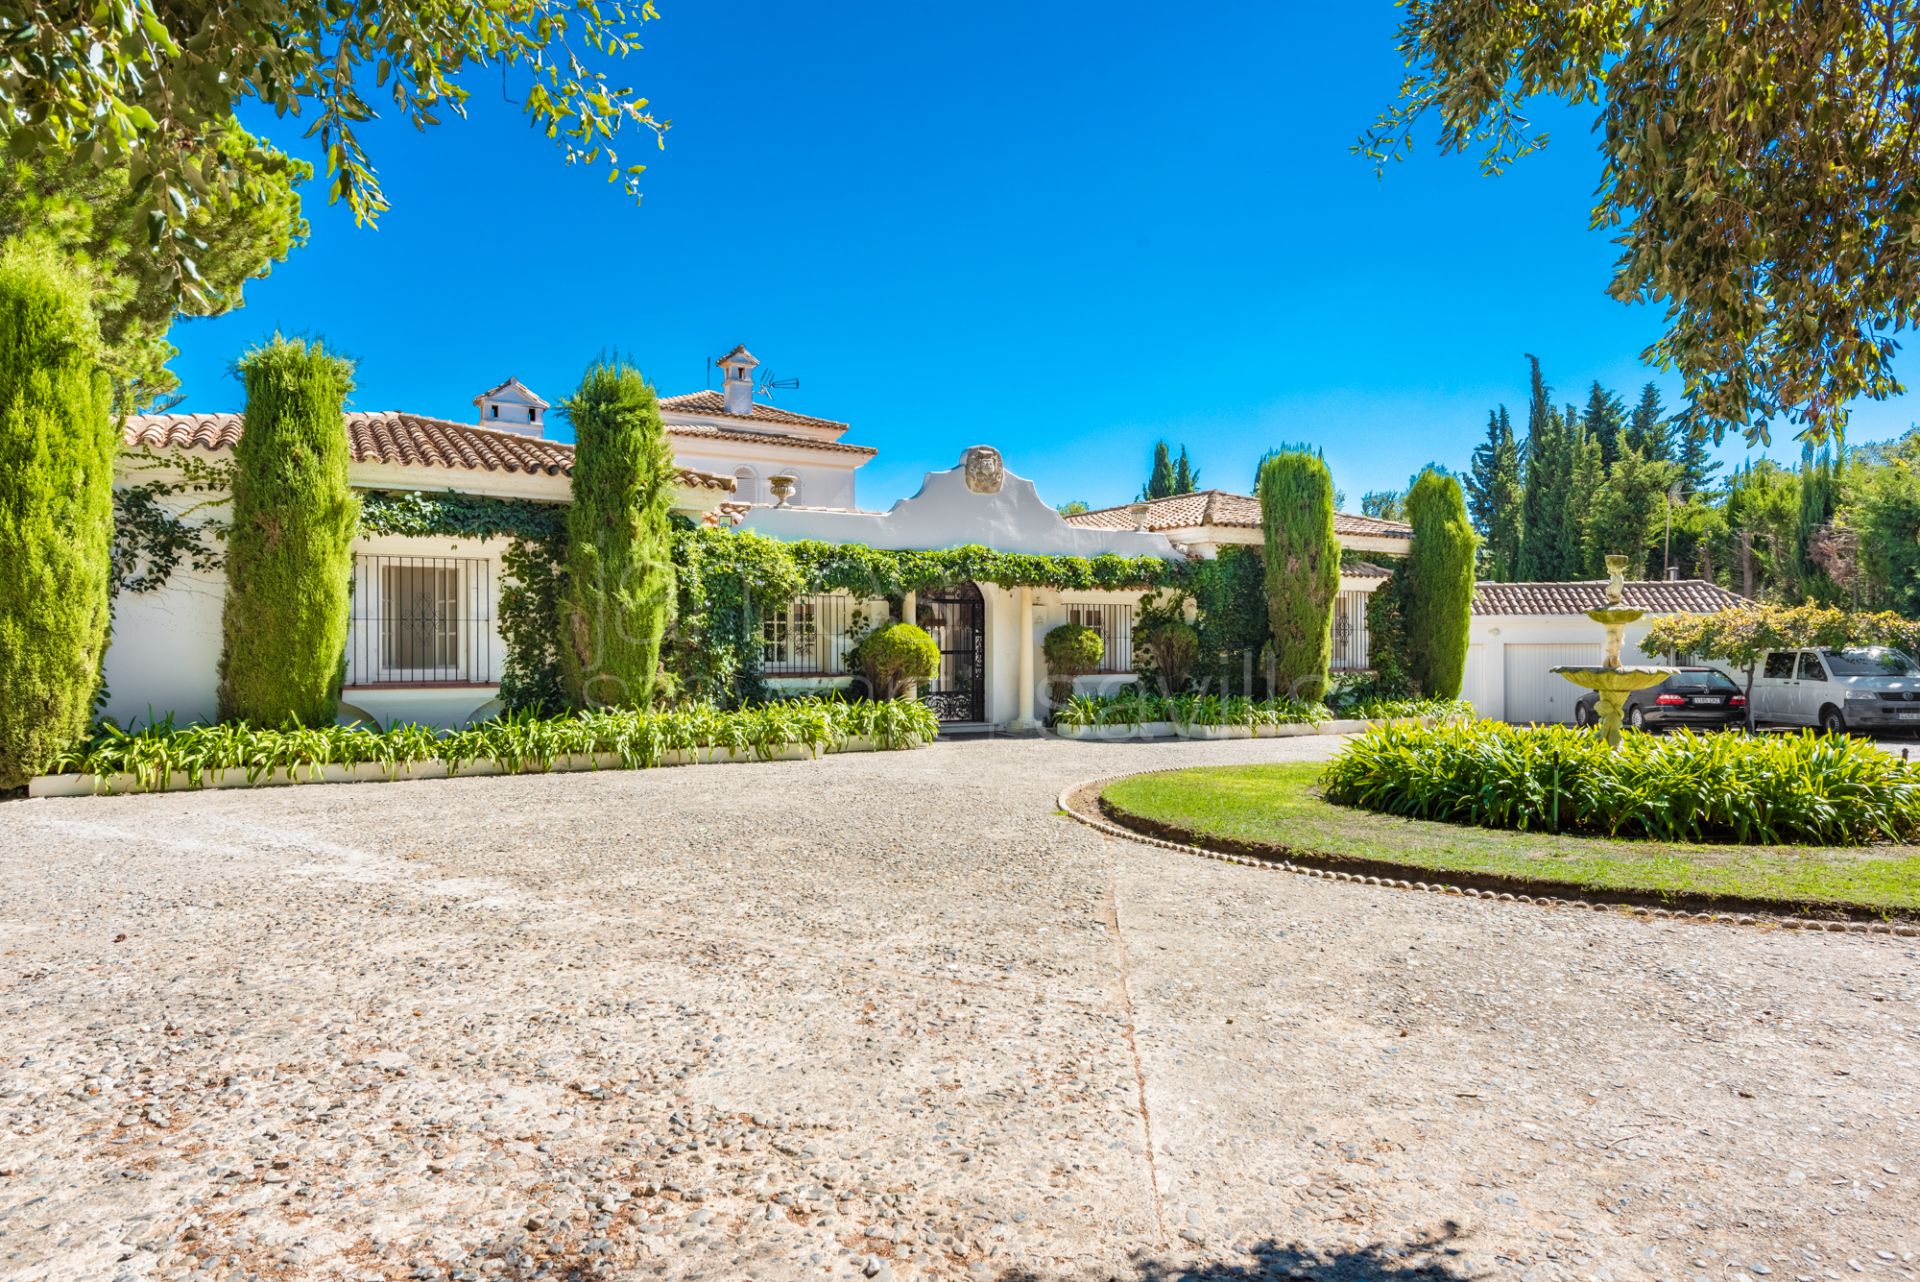 Beautiful classic cortijo style villa with immense charm